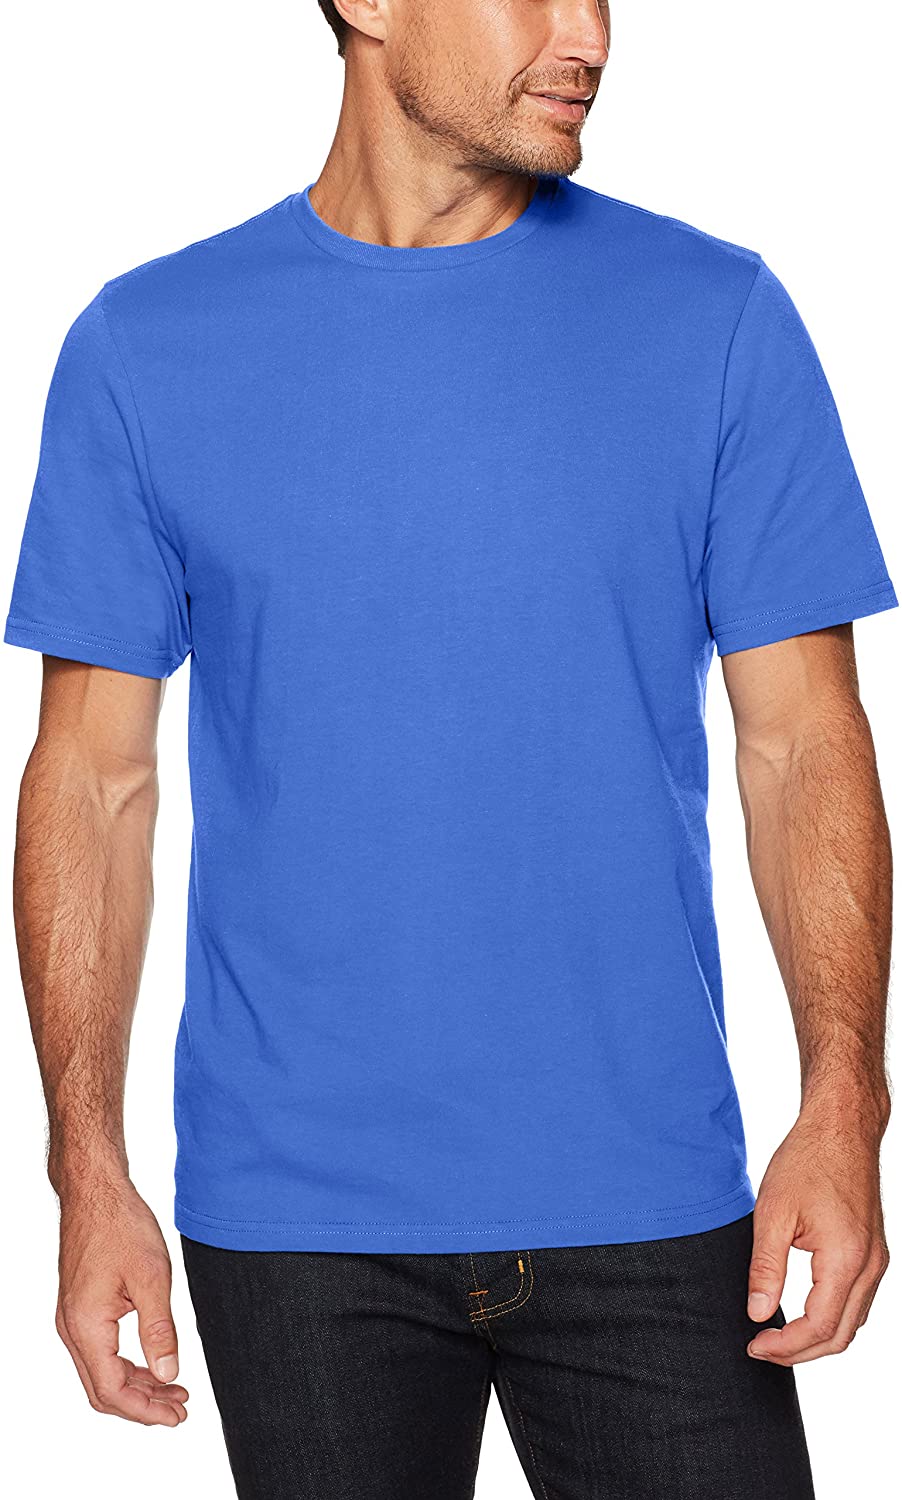 Essentials Men/'s 2-Pack Loose-Fit Short-Sleeve Crewneck T-Shirts Large Imperial Blue